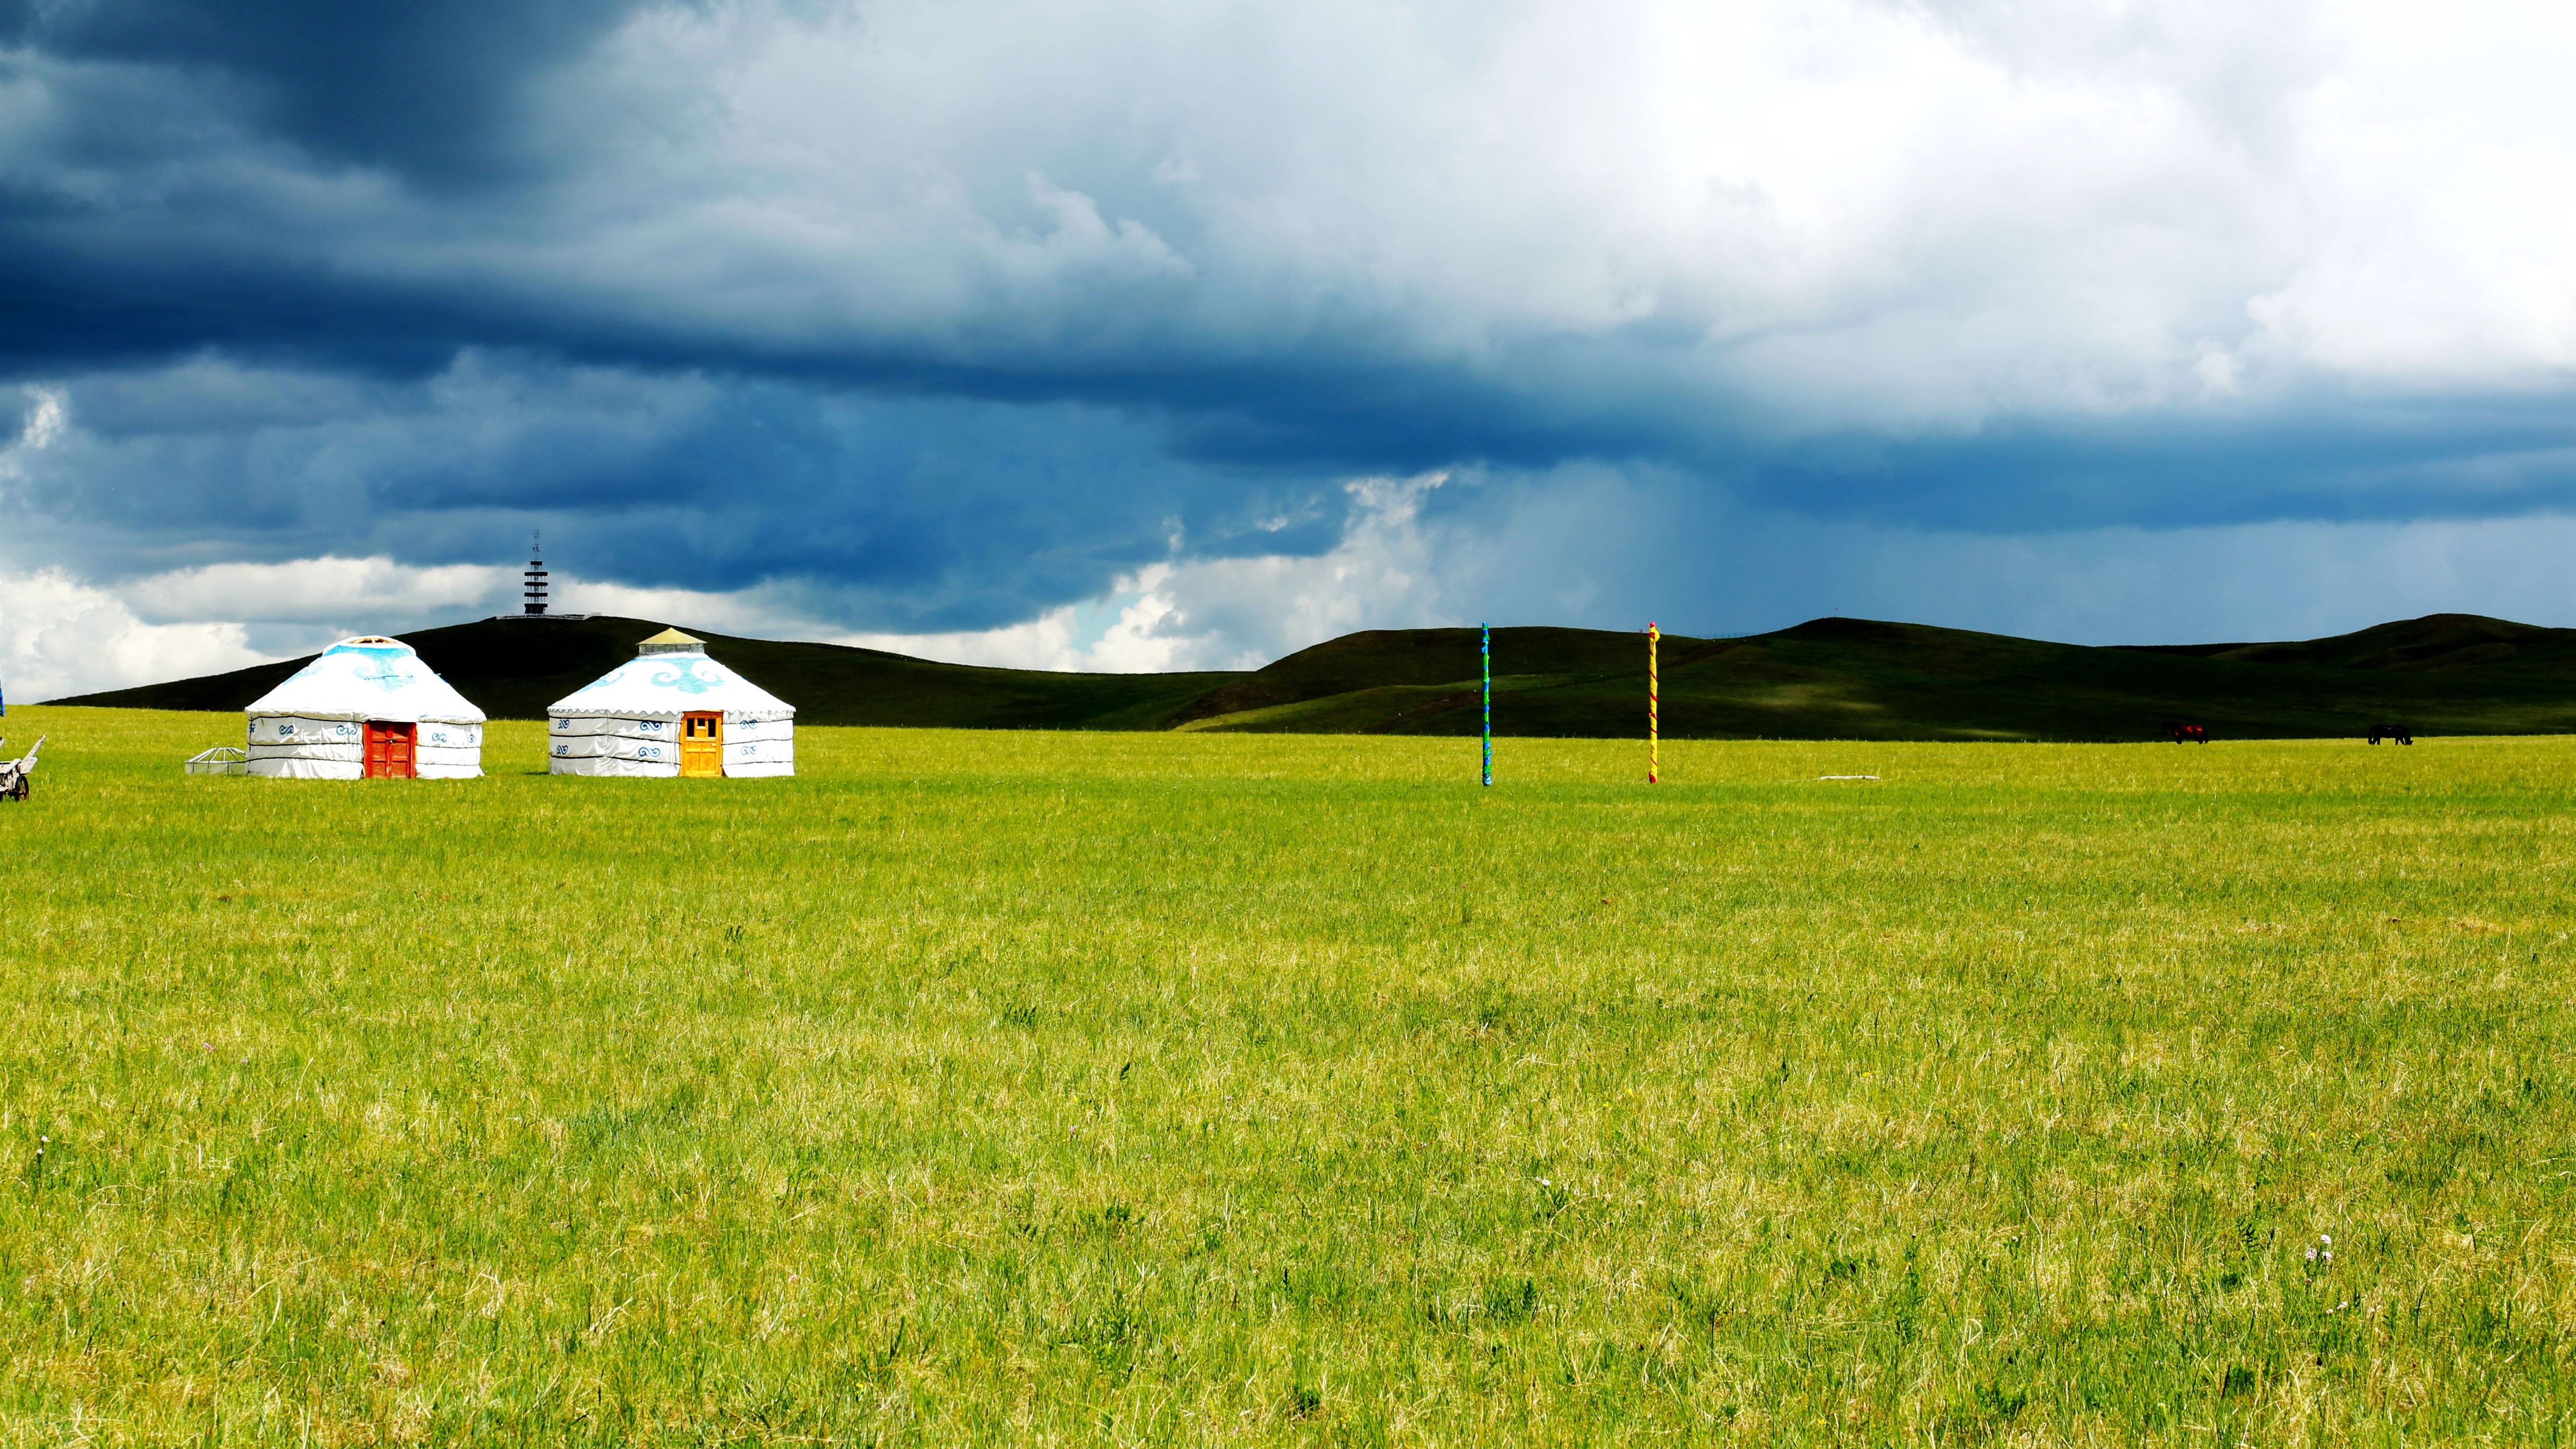 Wallpaper Inner Mongolia grassland, yurt 5120x2880 UHD 5K Picture, Image